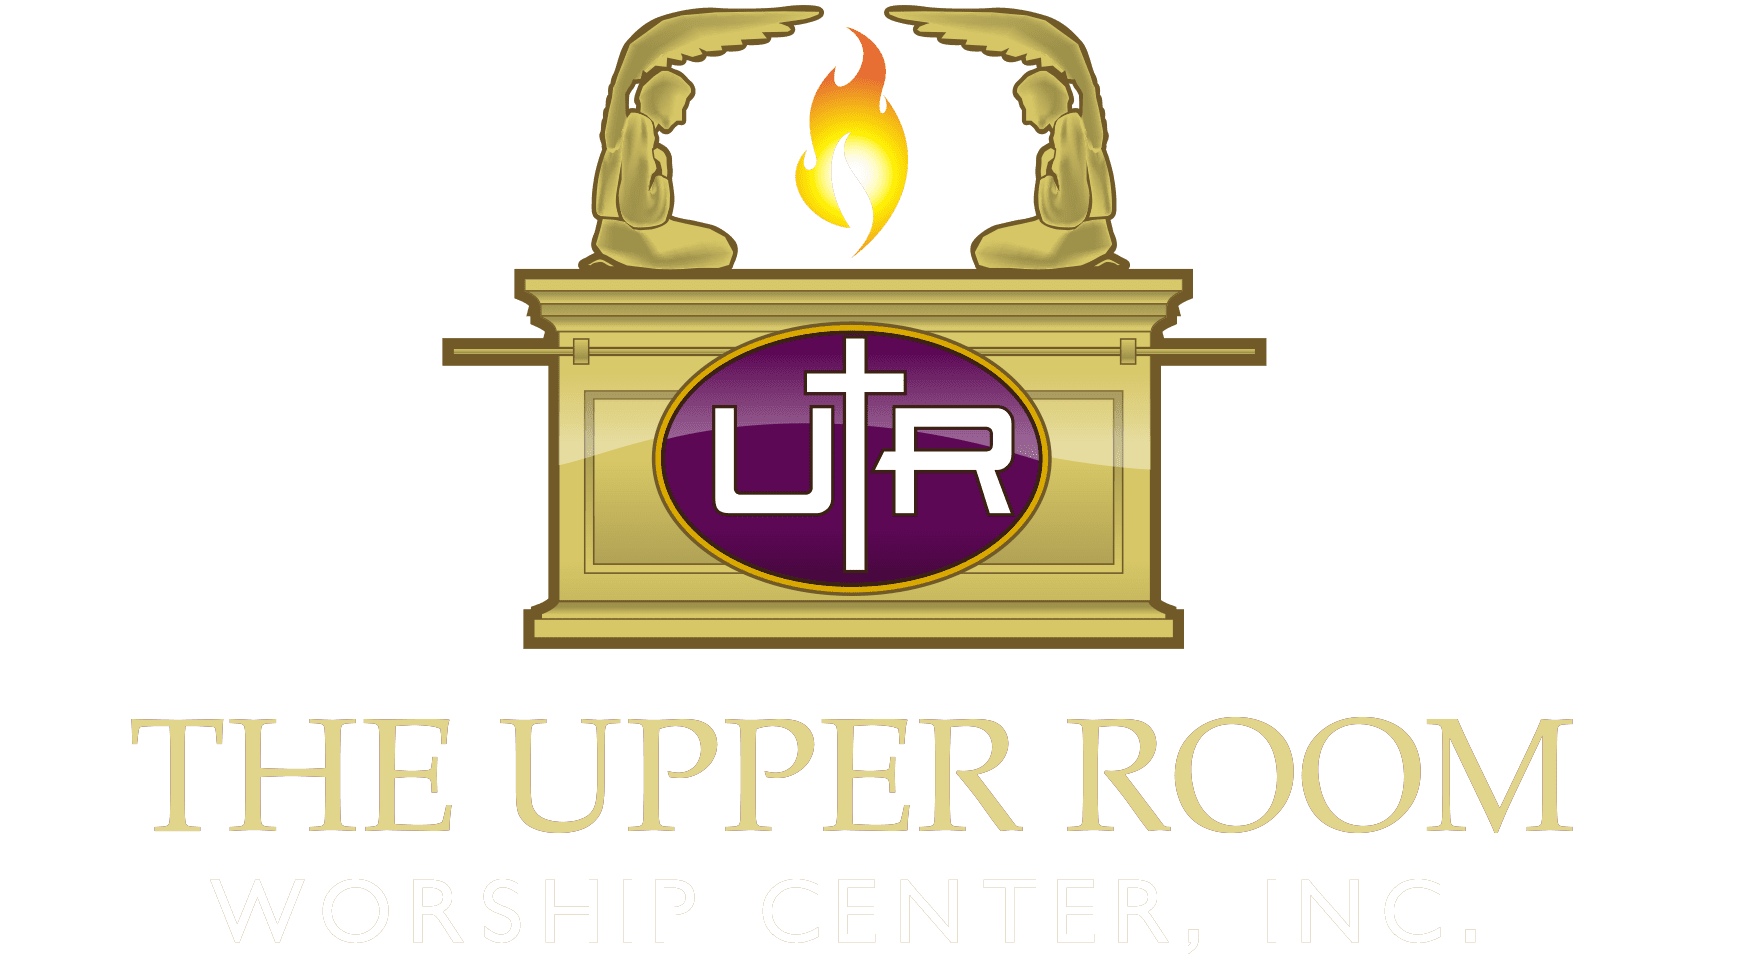 The Upper Room Worship Center